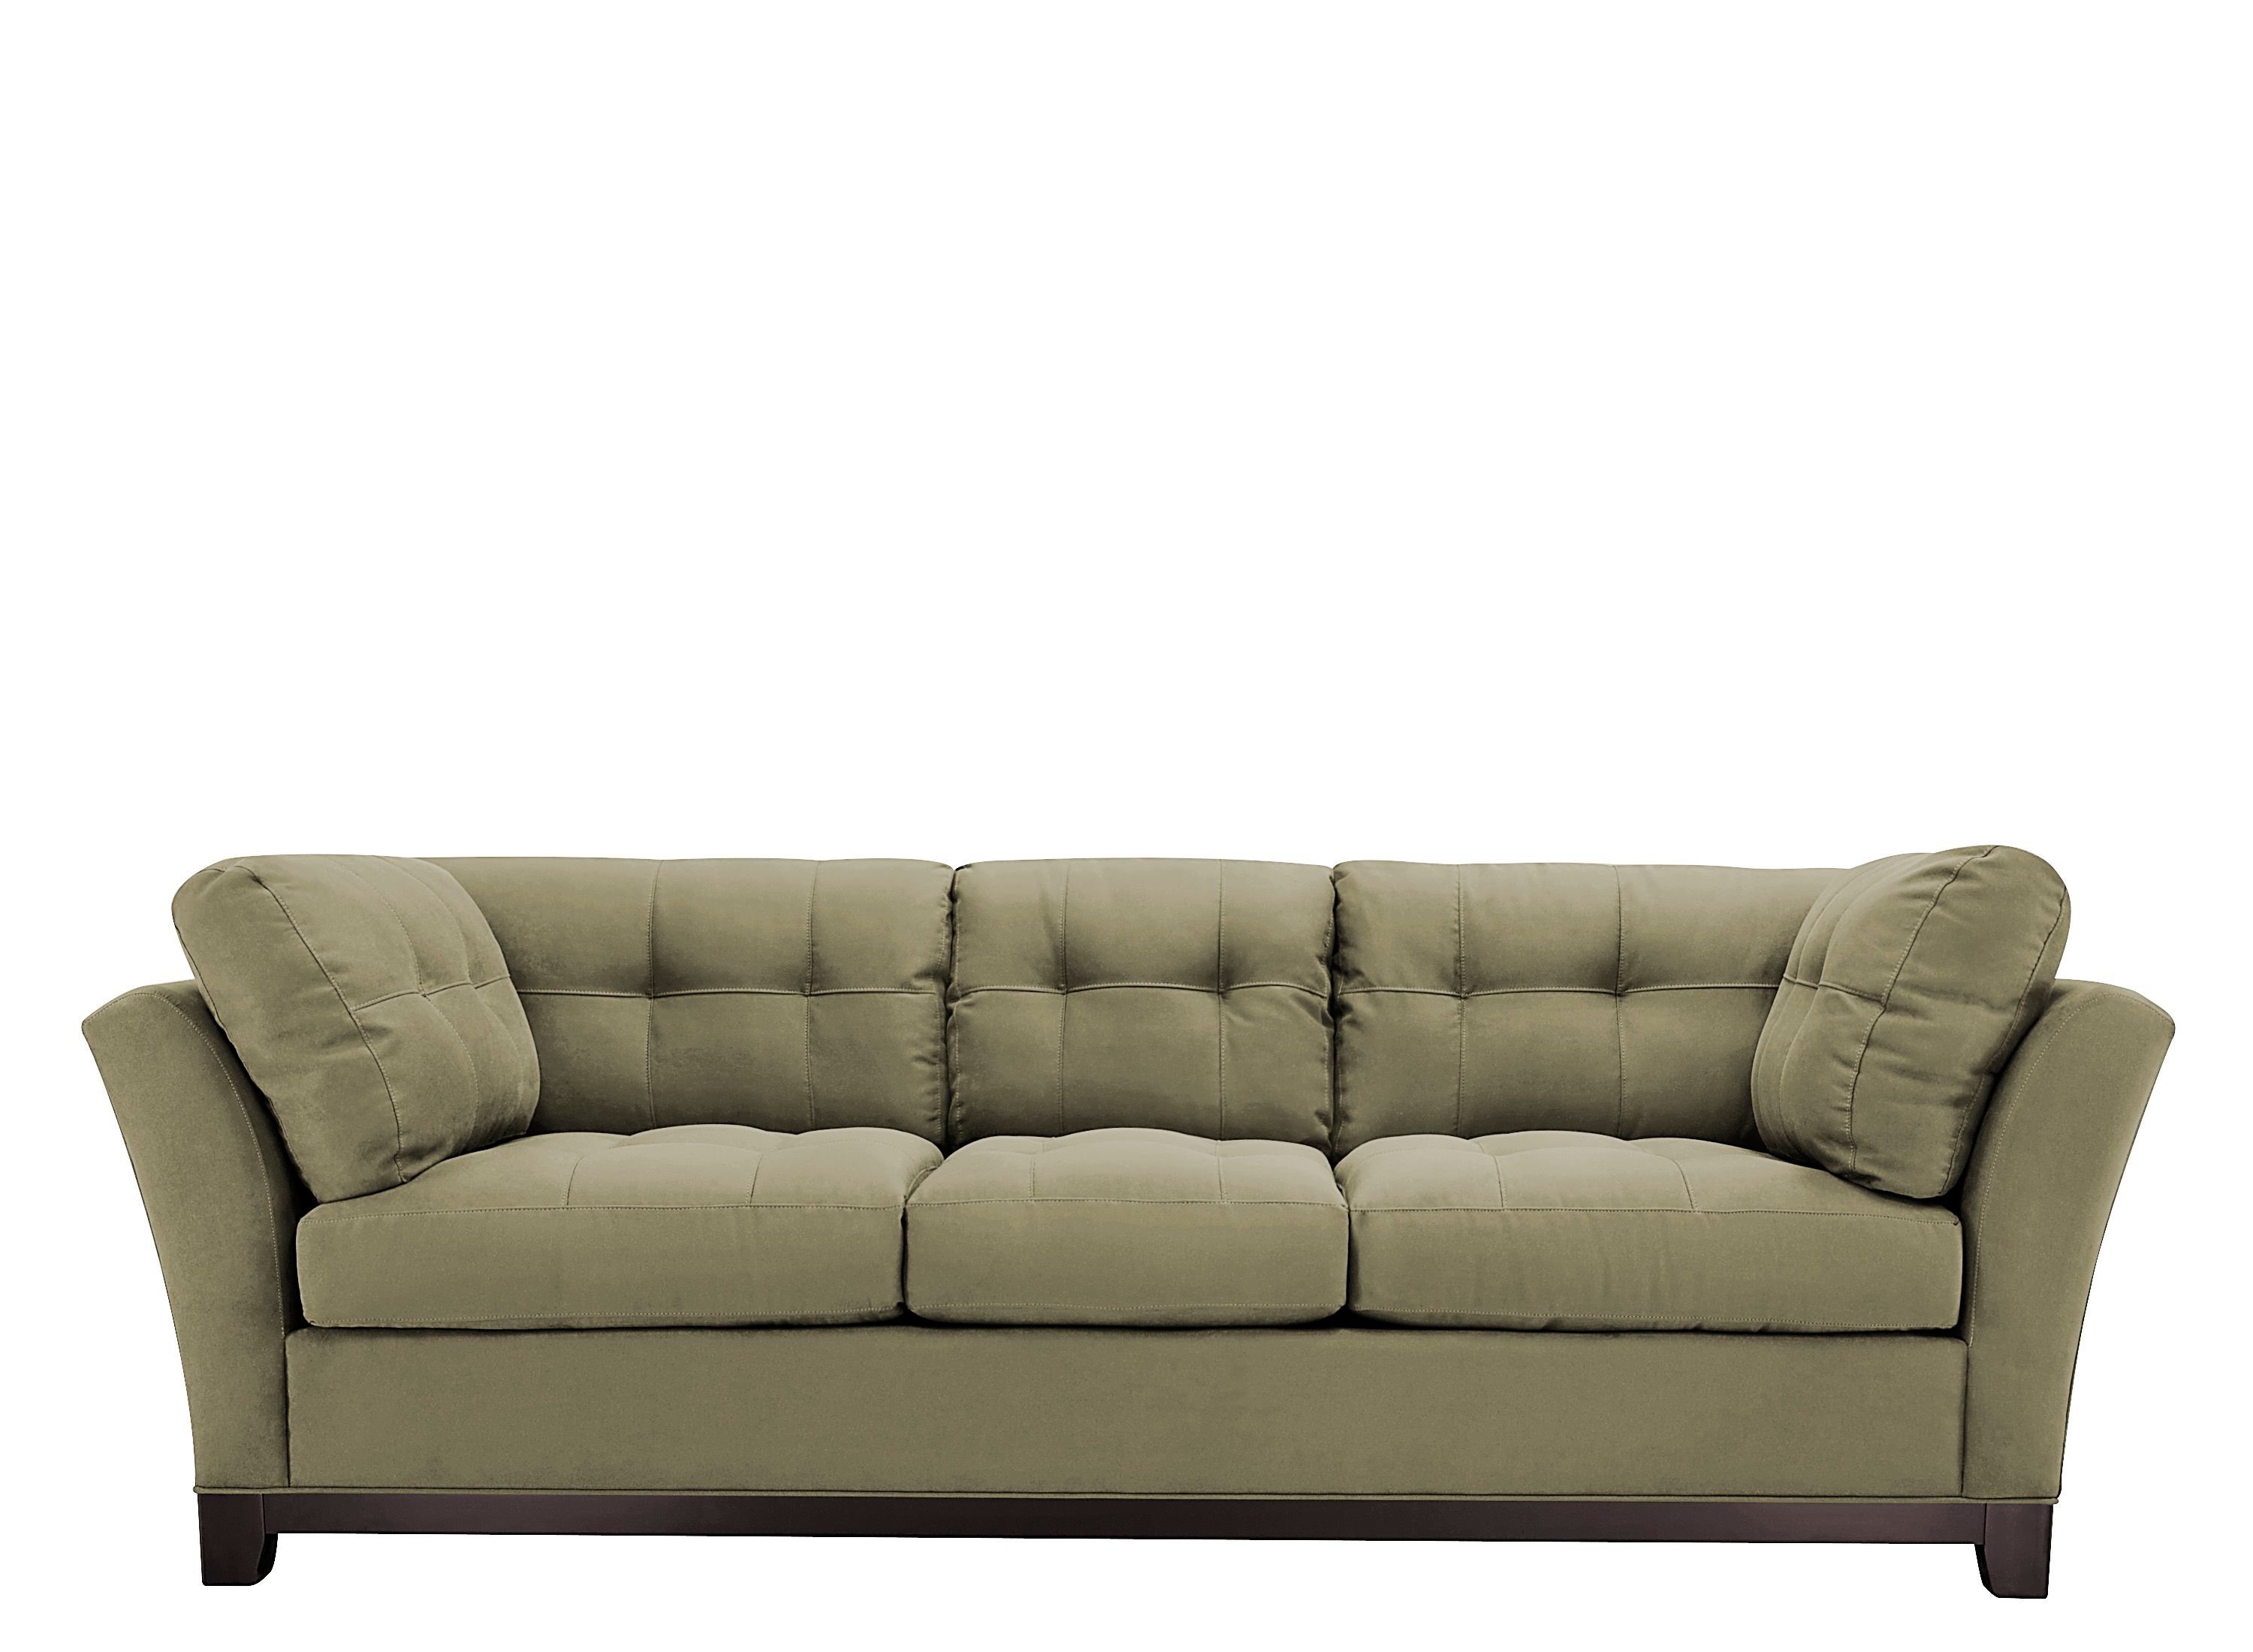 Cindy Crawford Home Metropolis Microfiber Sofa Suede So Soft